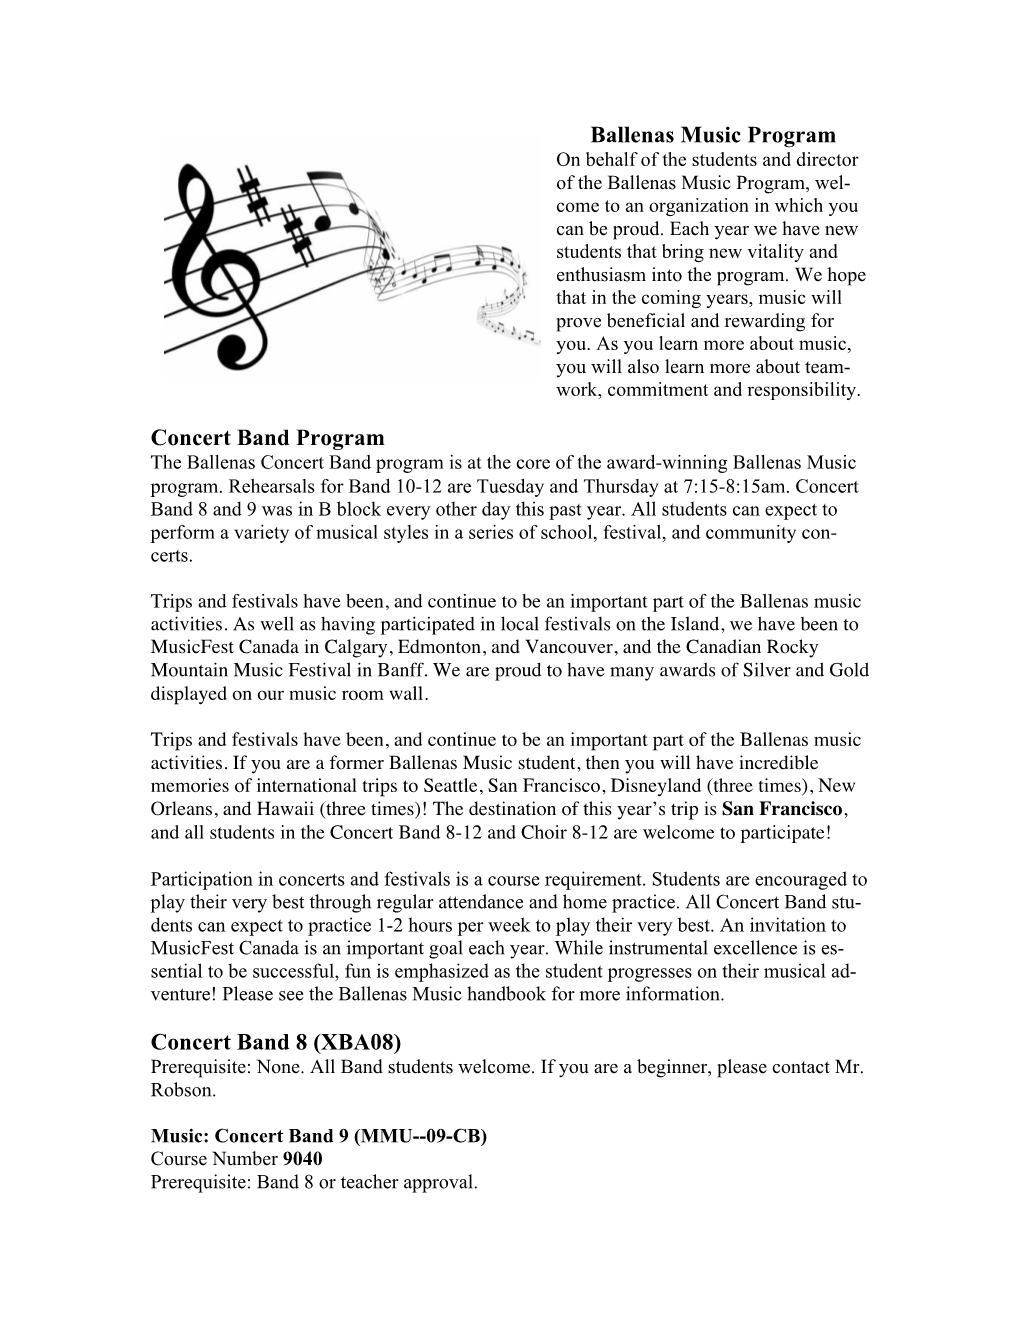 Ballenas Music Program Courses